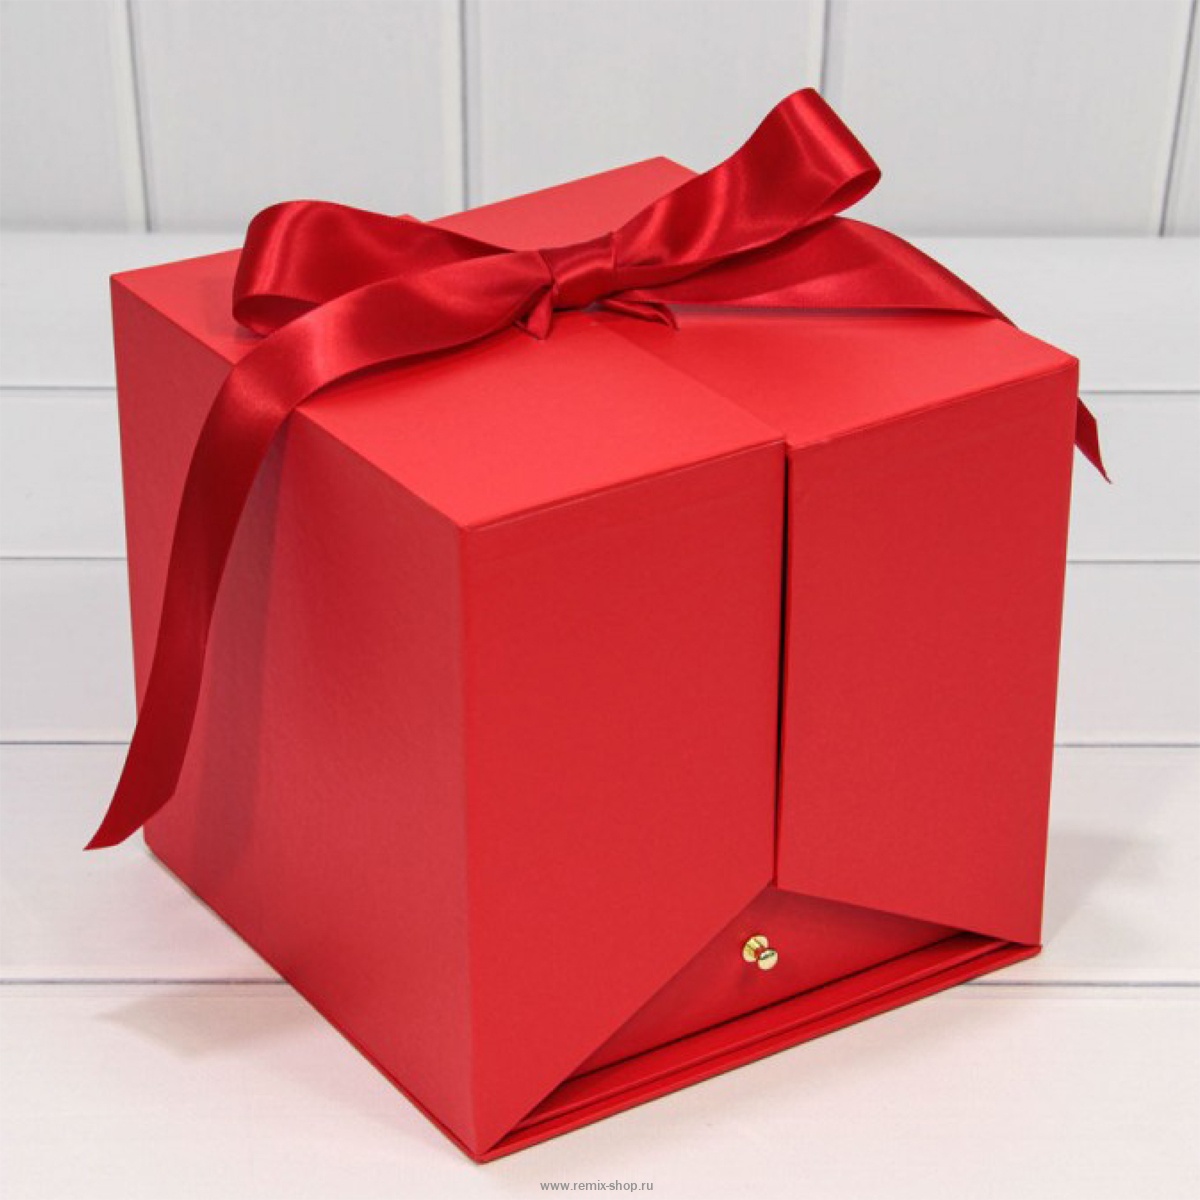 Cube 18. Подарочная коробка красная. Коробка-куб. Квадратный подарок. Коробка куб сюрприз.